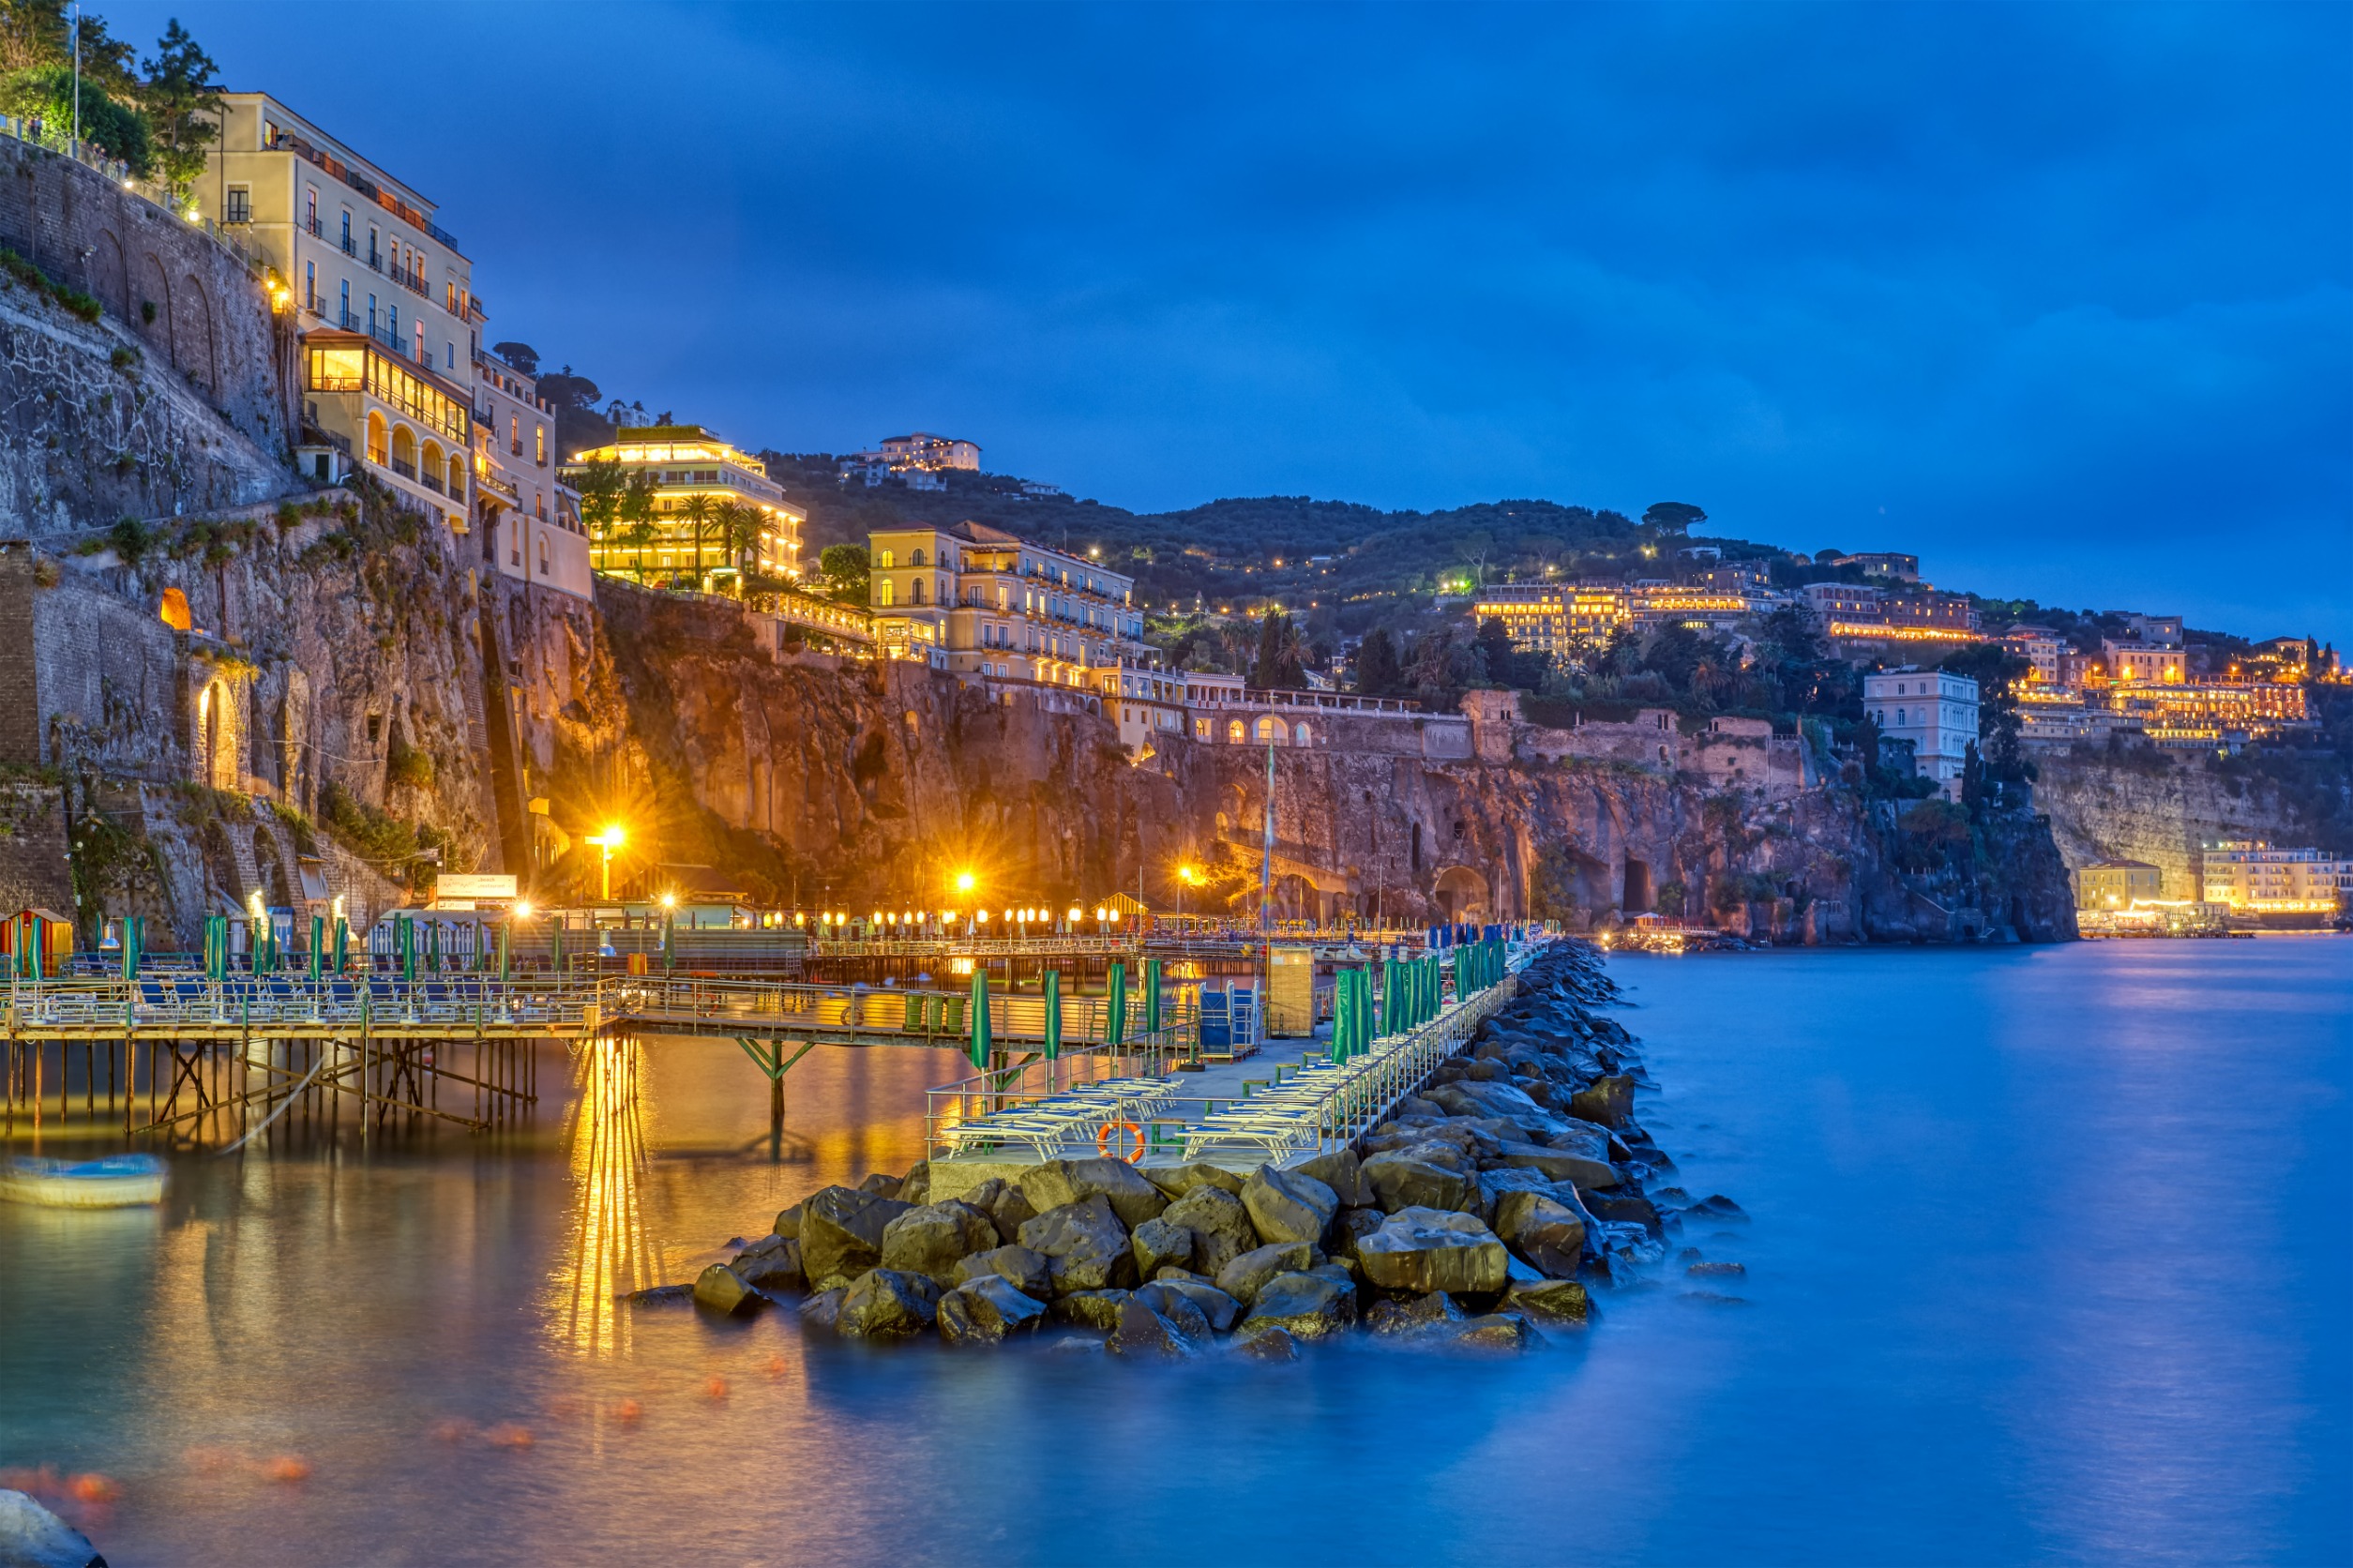 Sorrento and Positano: Two Charming Coastal Towns to Visit